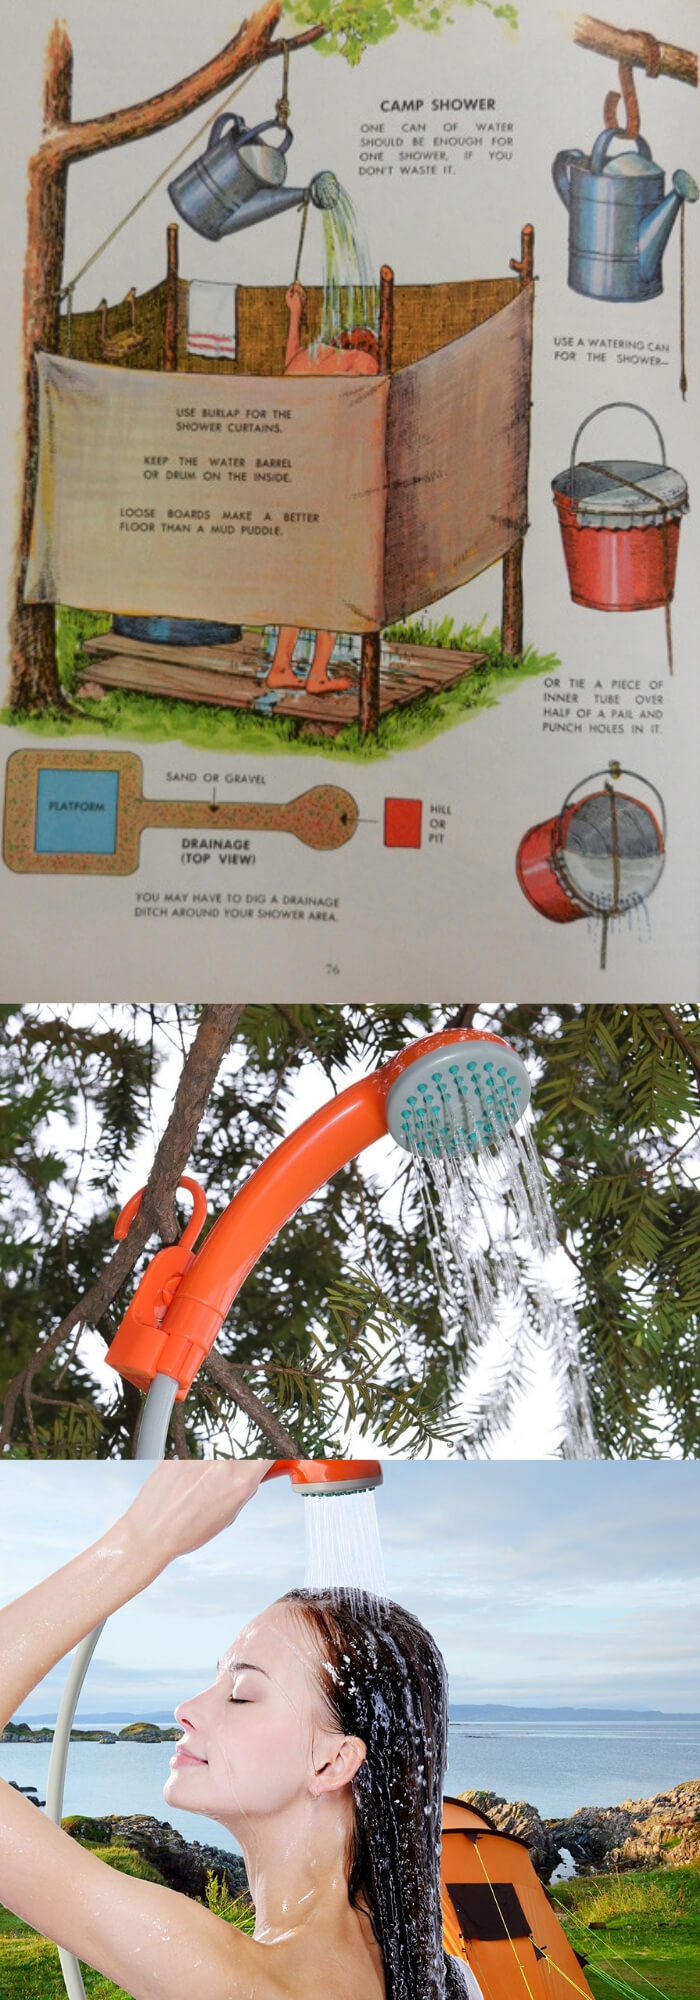 15 outdoor shower ideas